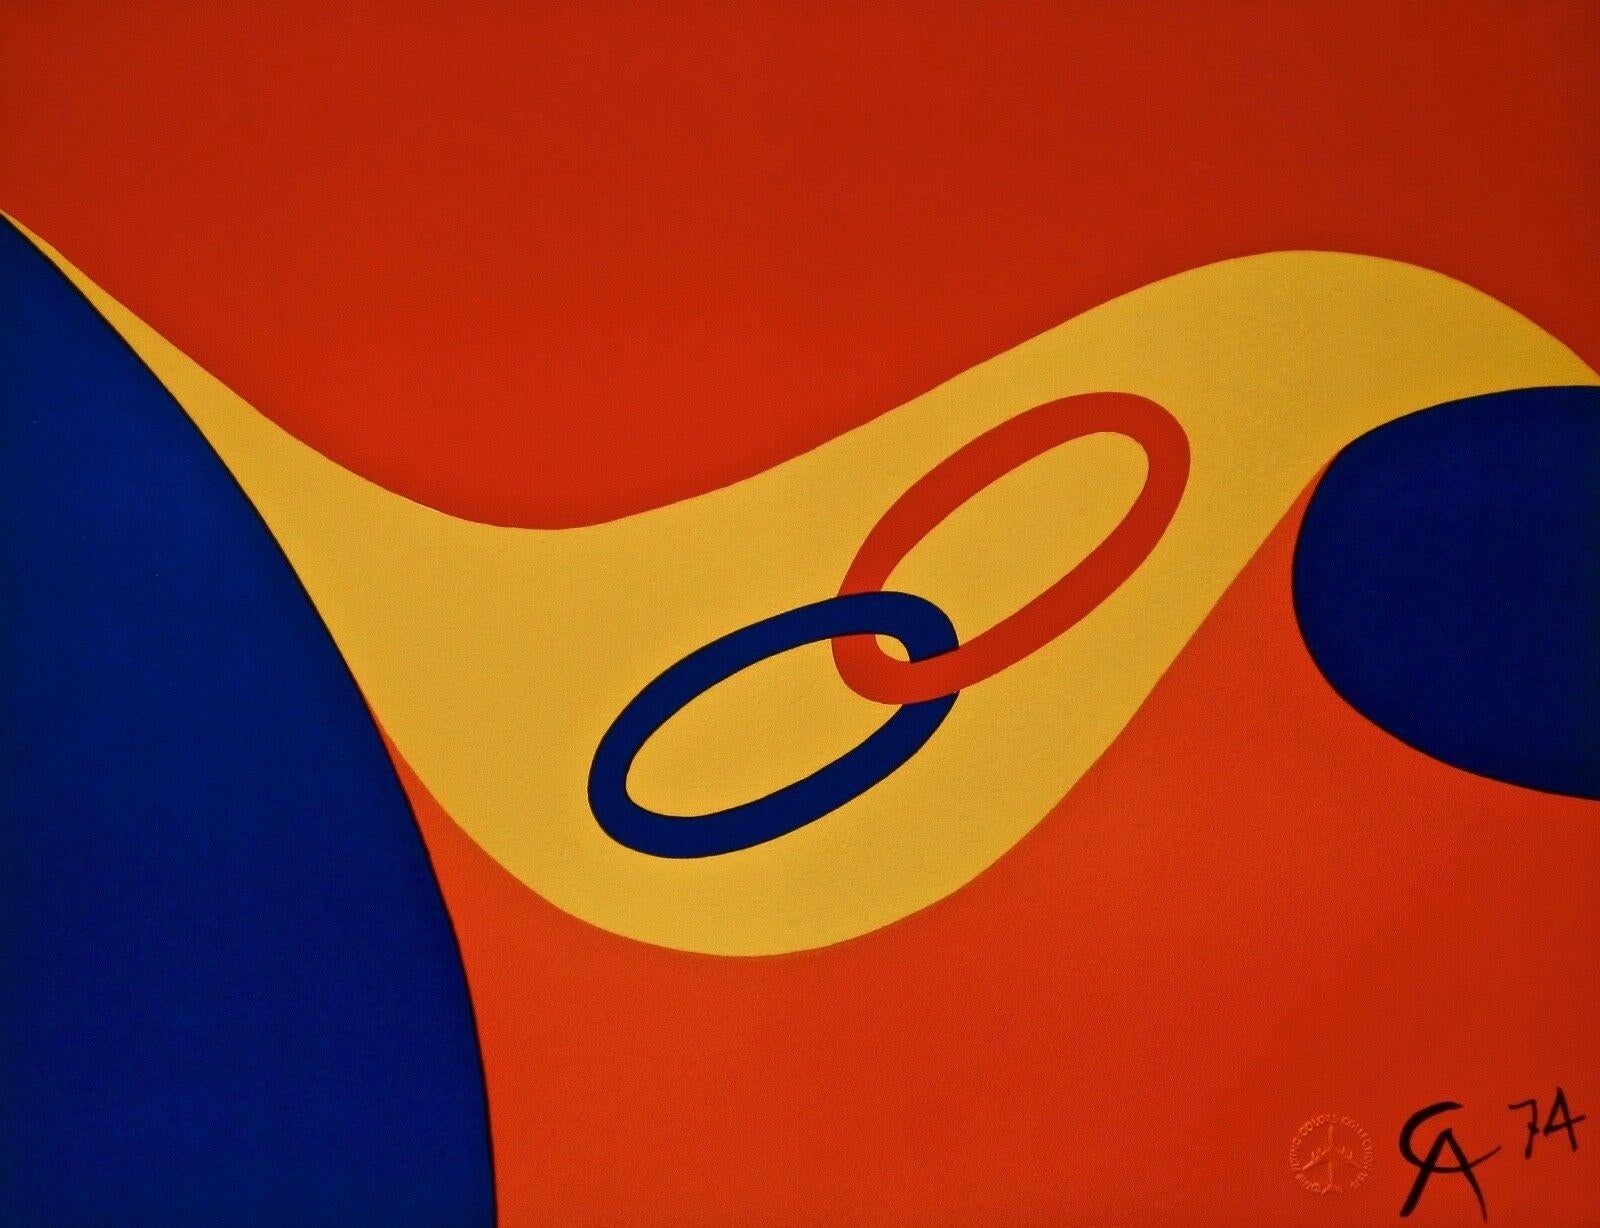 Flying Colors Collection (5 artworks) - Print by Alexander Calder